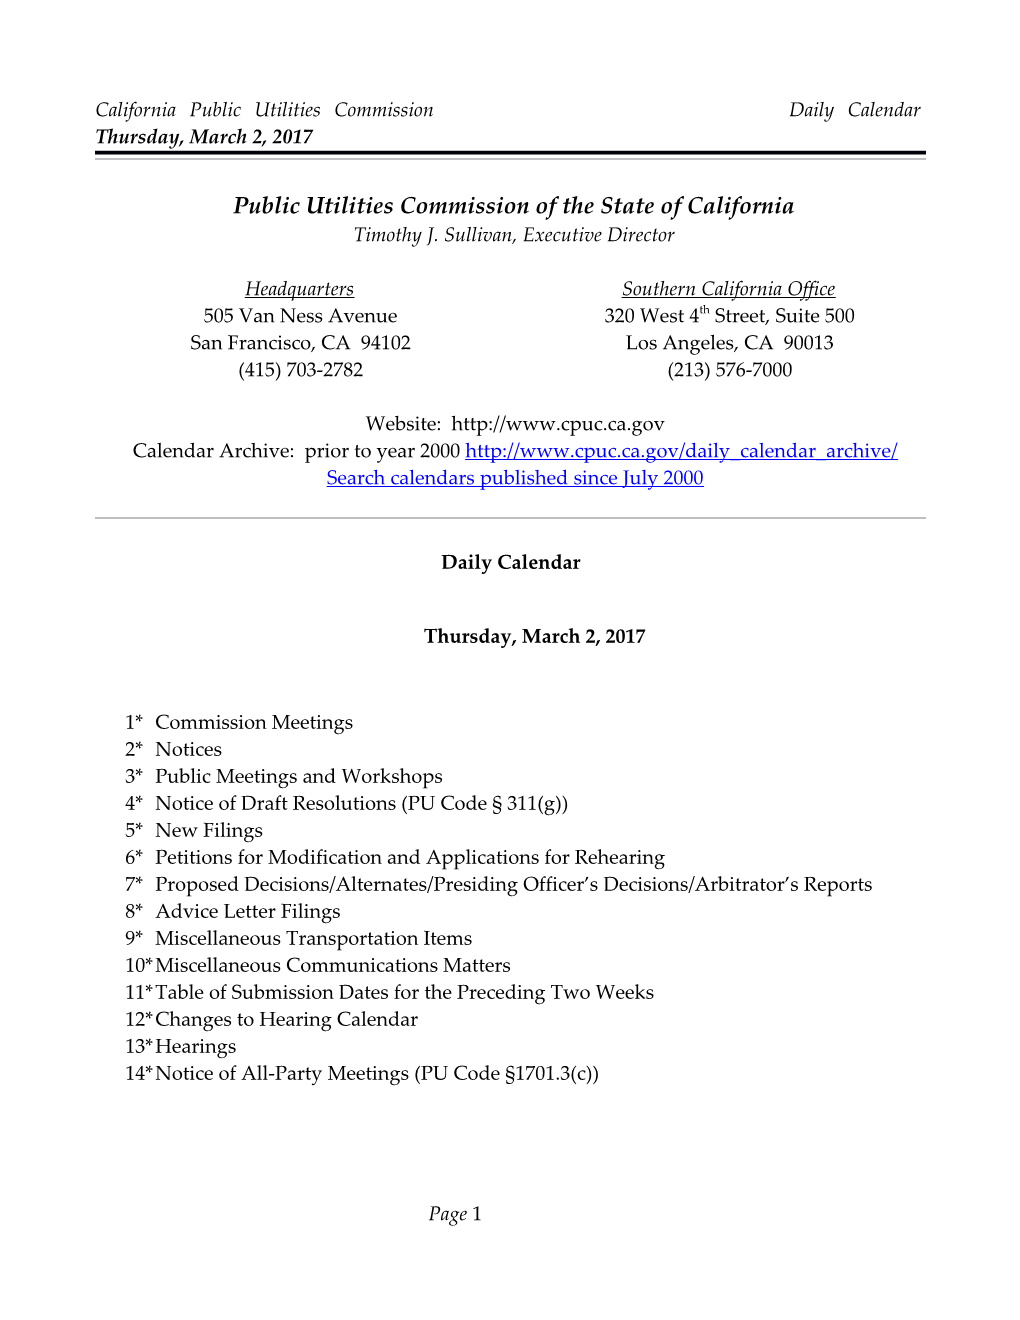 California Public Utilities Commission Daily Calendar Thursday, March 2, 2017